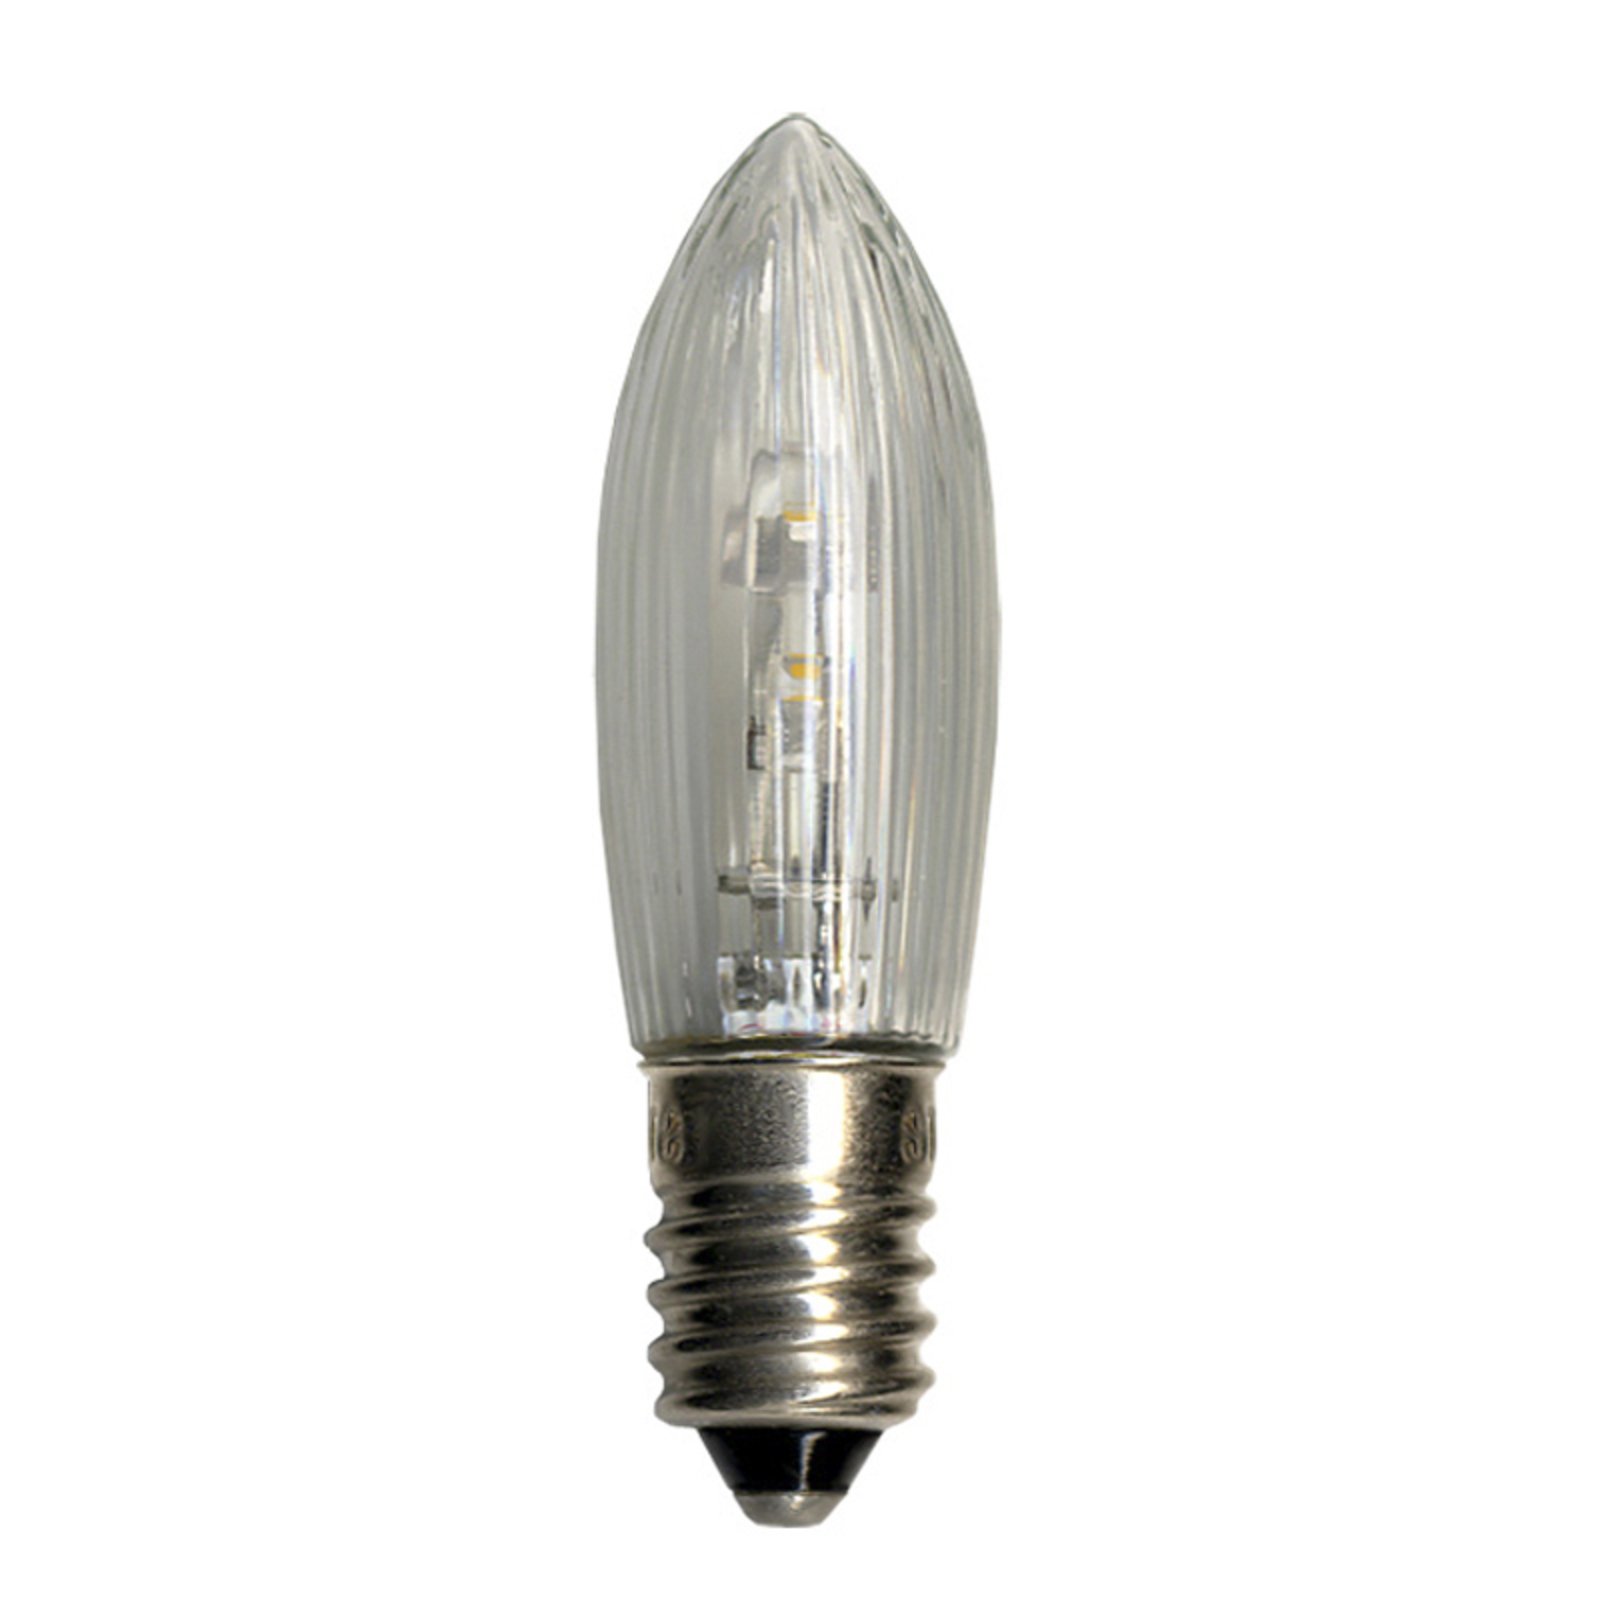 Lampki zapasowe LED E10 0,2W 10-55V 3 szt